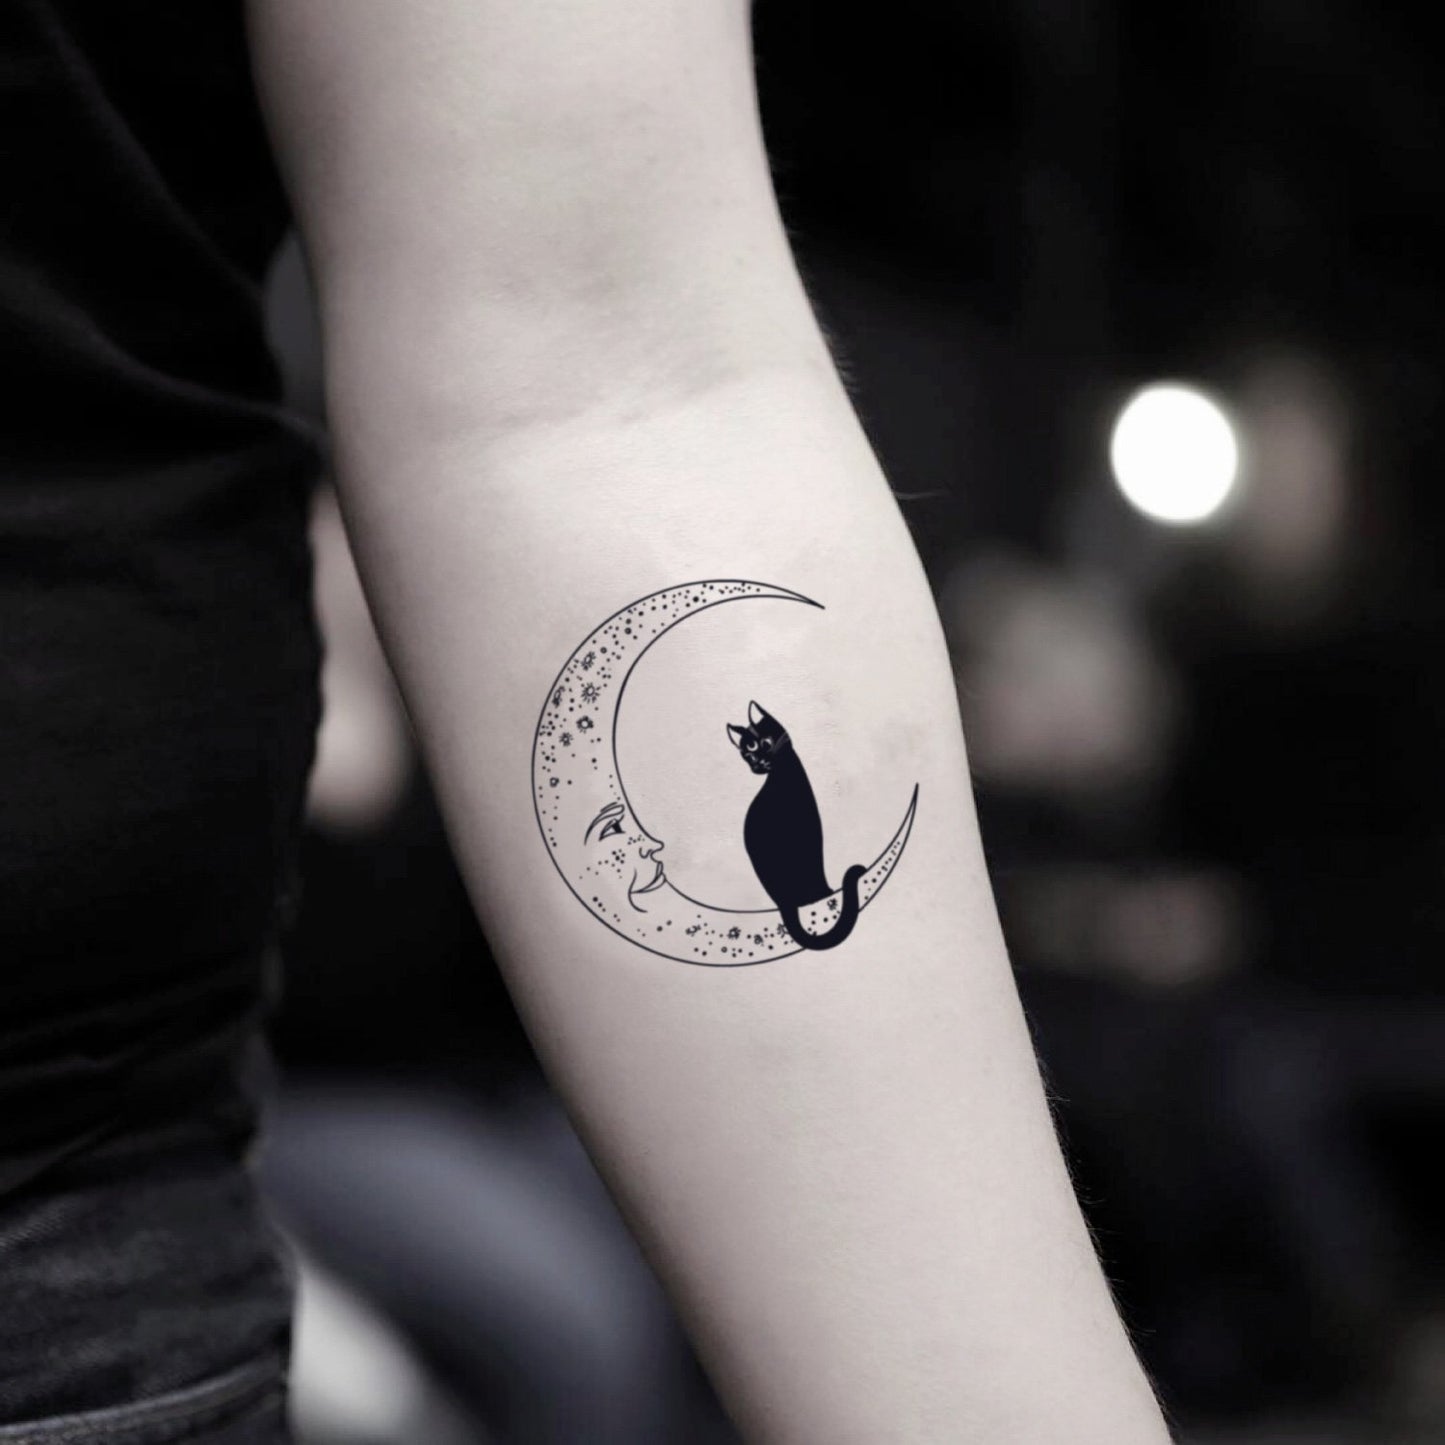 fake small black cat moon animal temporary tattoo sticker design idea on inner arm